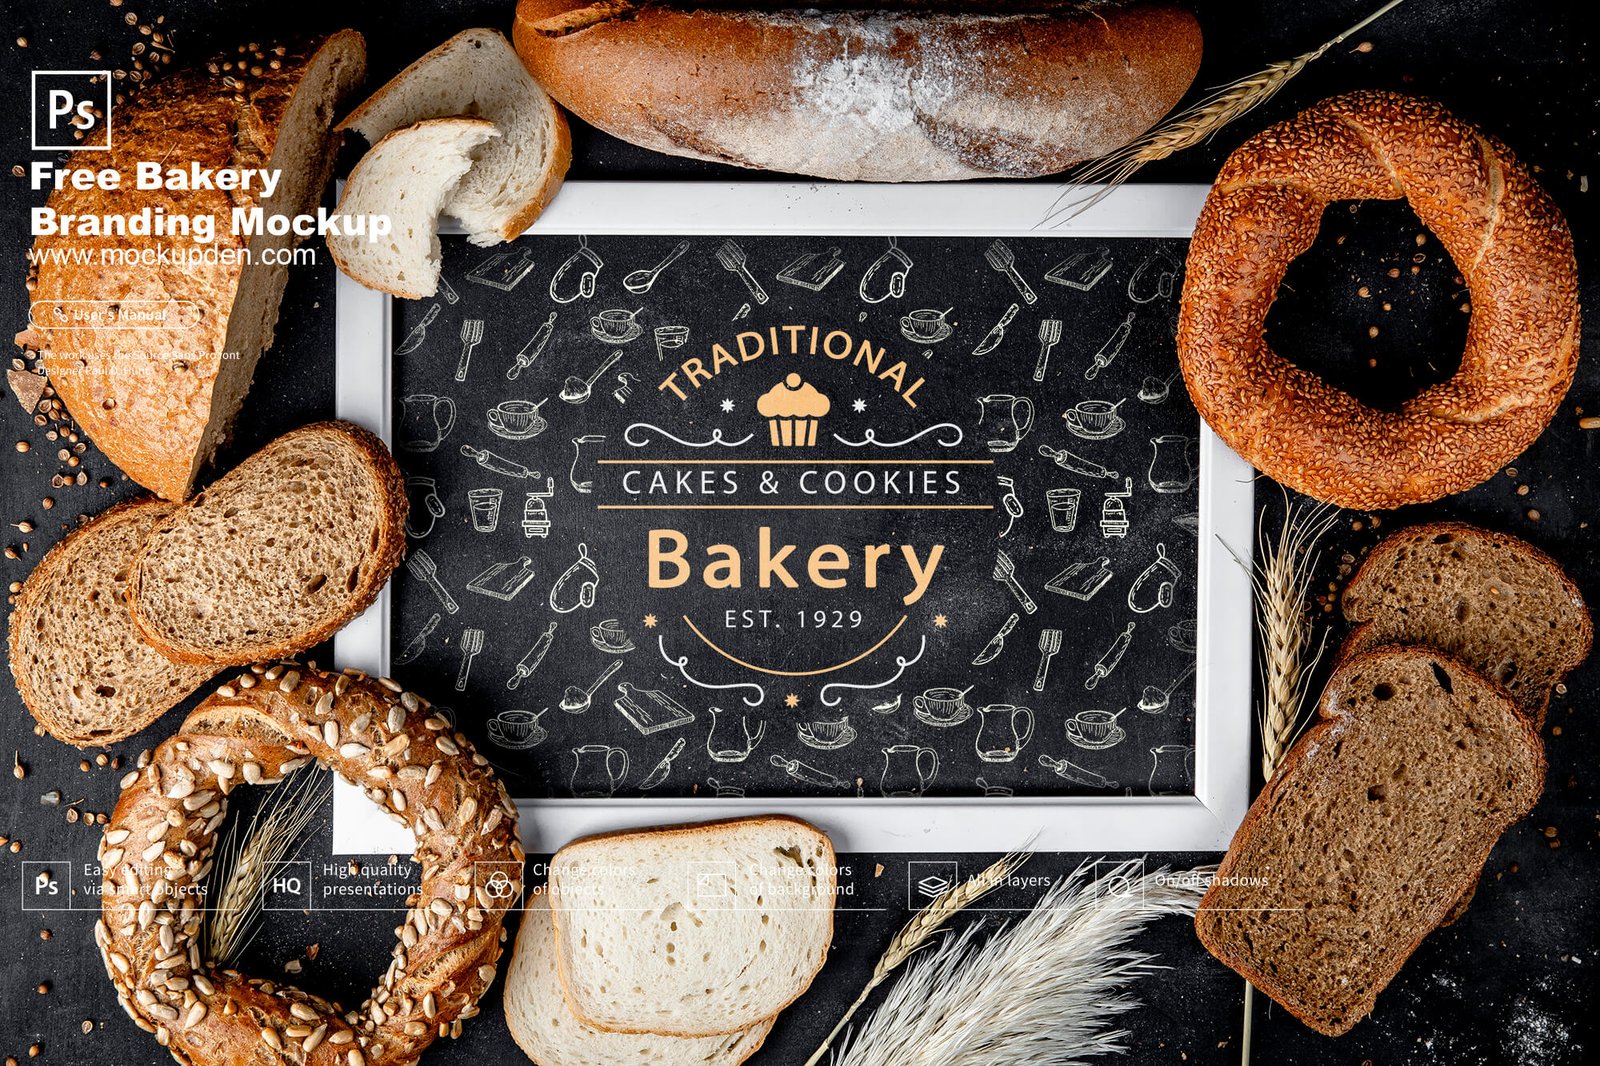 Free Bakery Branding Mockup PSD Template | Mockup Den